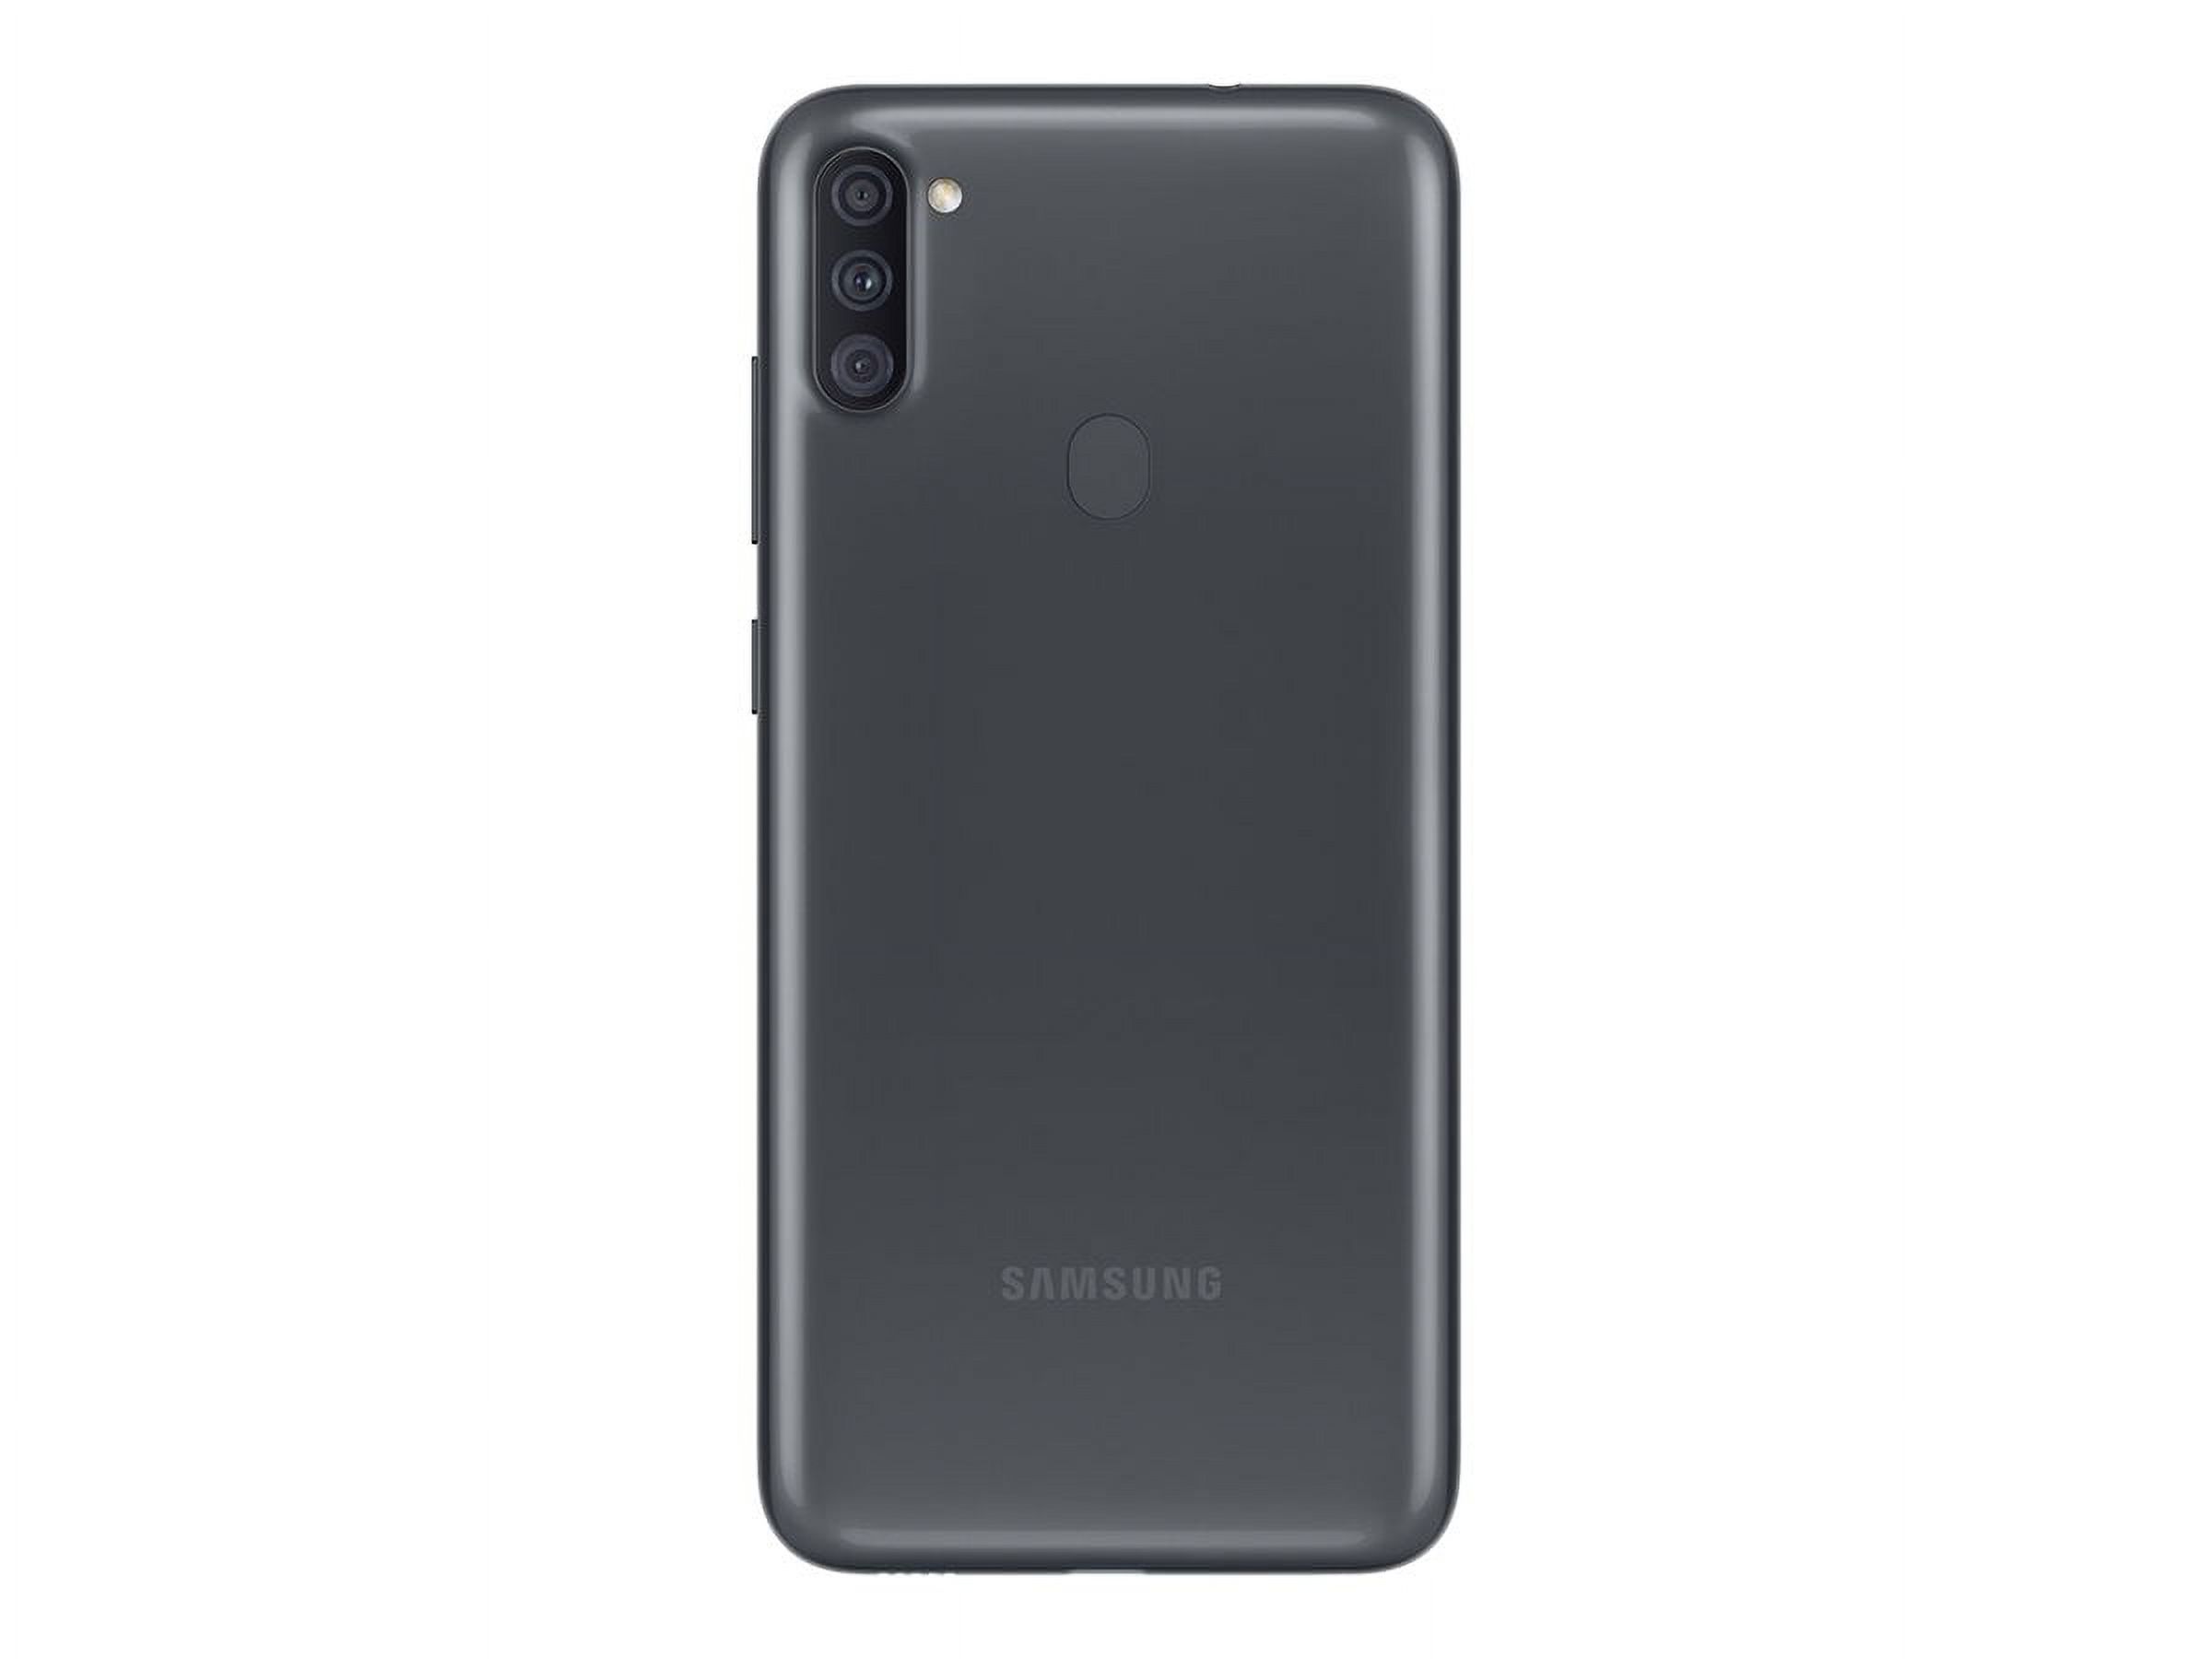 Samsung Galaxy A11 - Smartphone - 4G LTE - 32 GB - microSD slot - 6.4" - 1560 x 720 pixels - PLS TFT - RAM 2 GB (8 MP front camera) - 3x rear cameras - Android - Boost - black - image 3 of 6